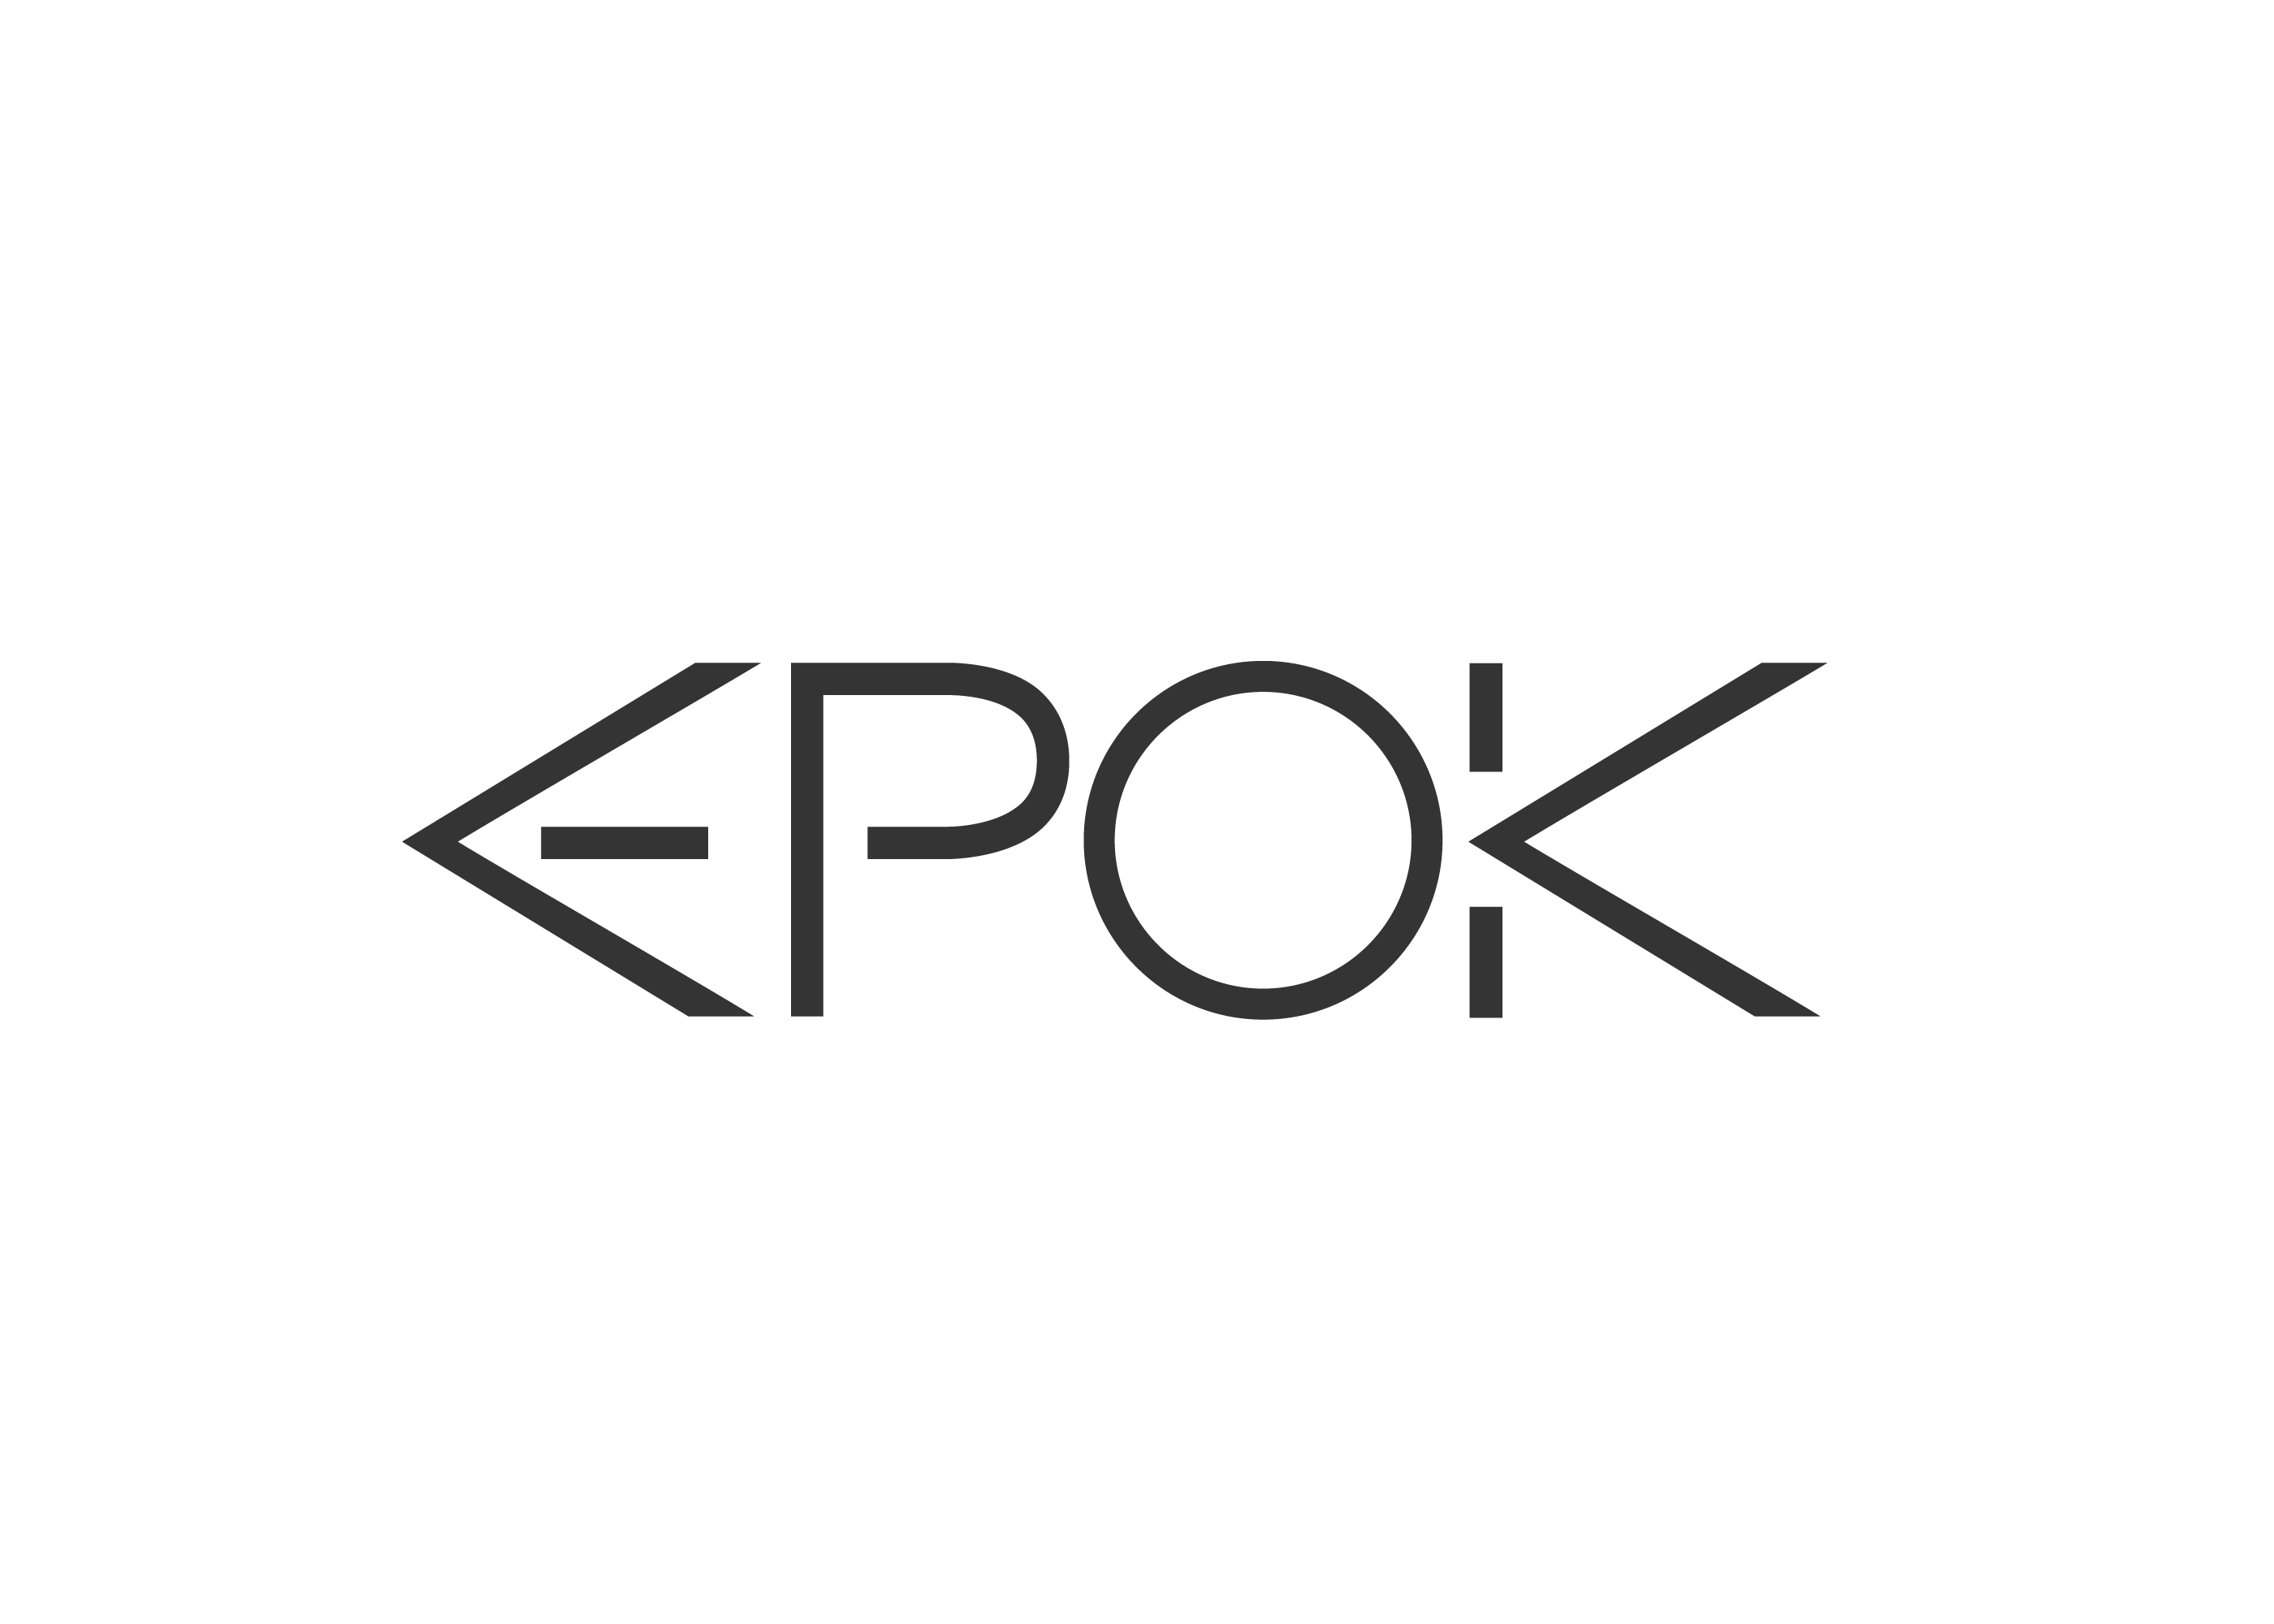 Epock Logo